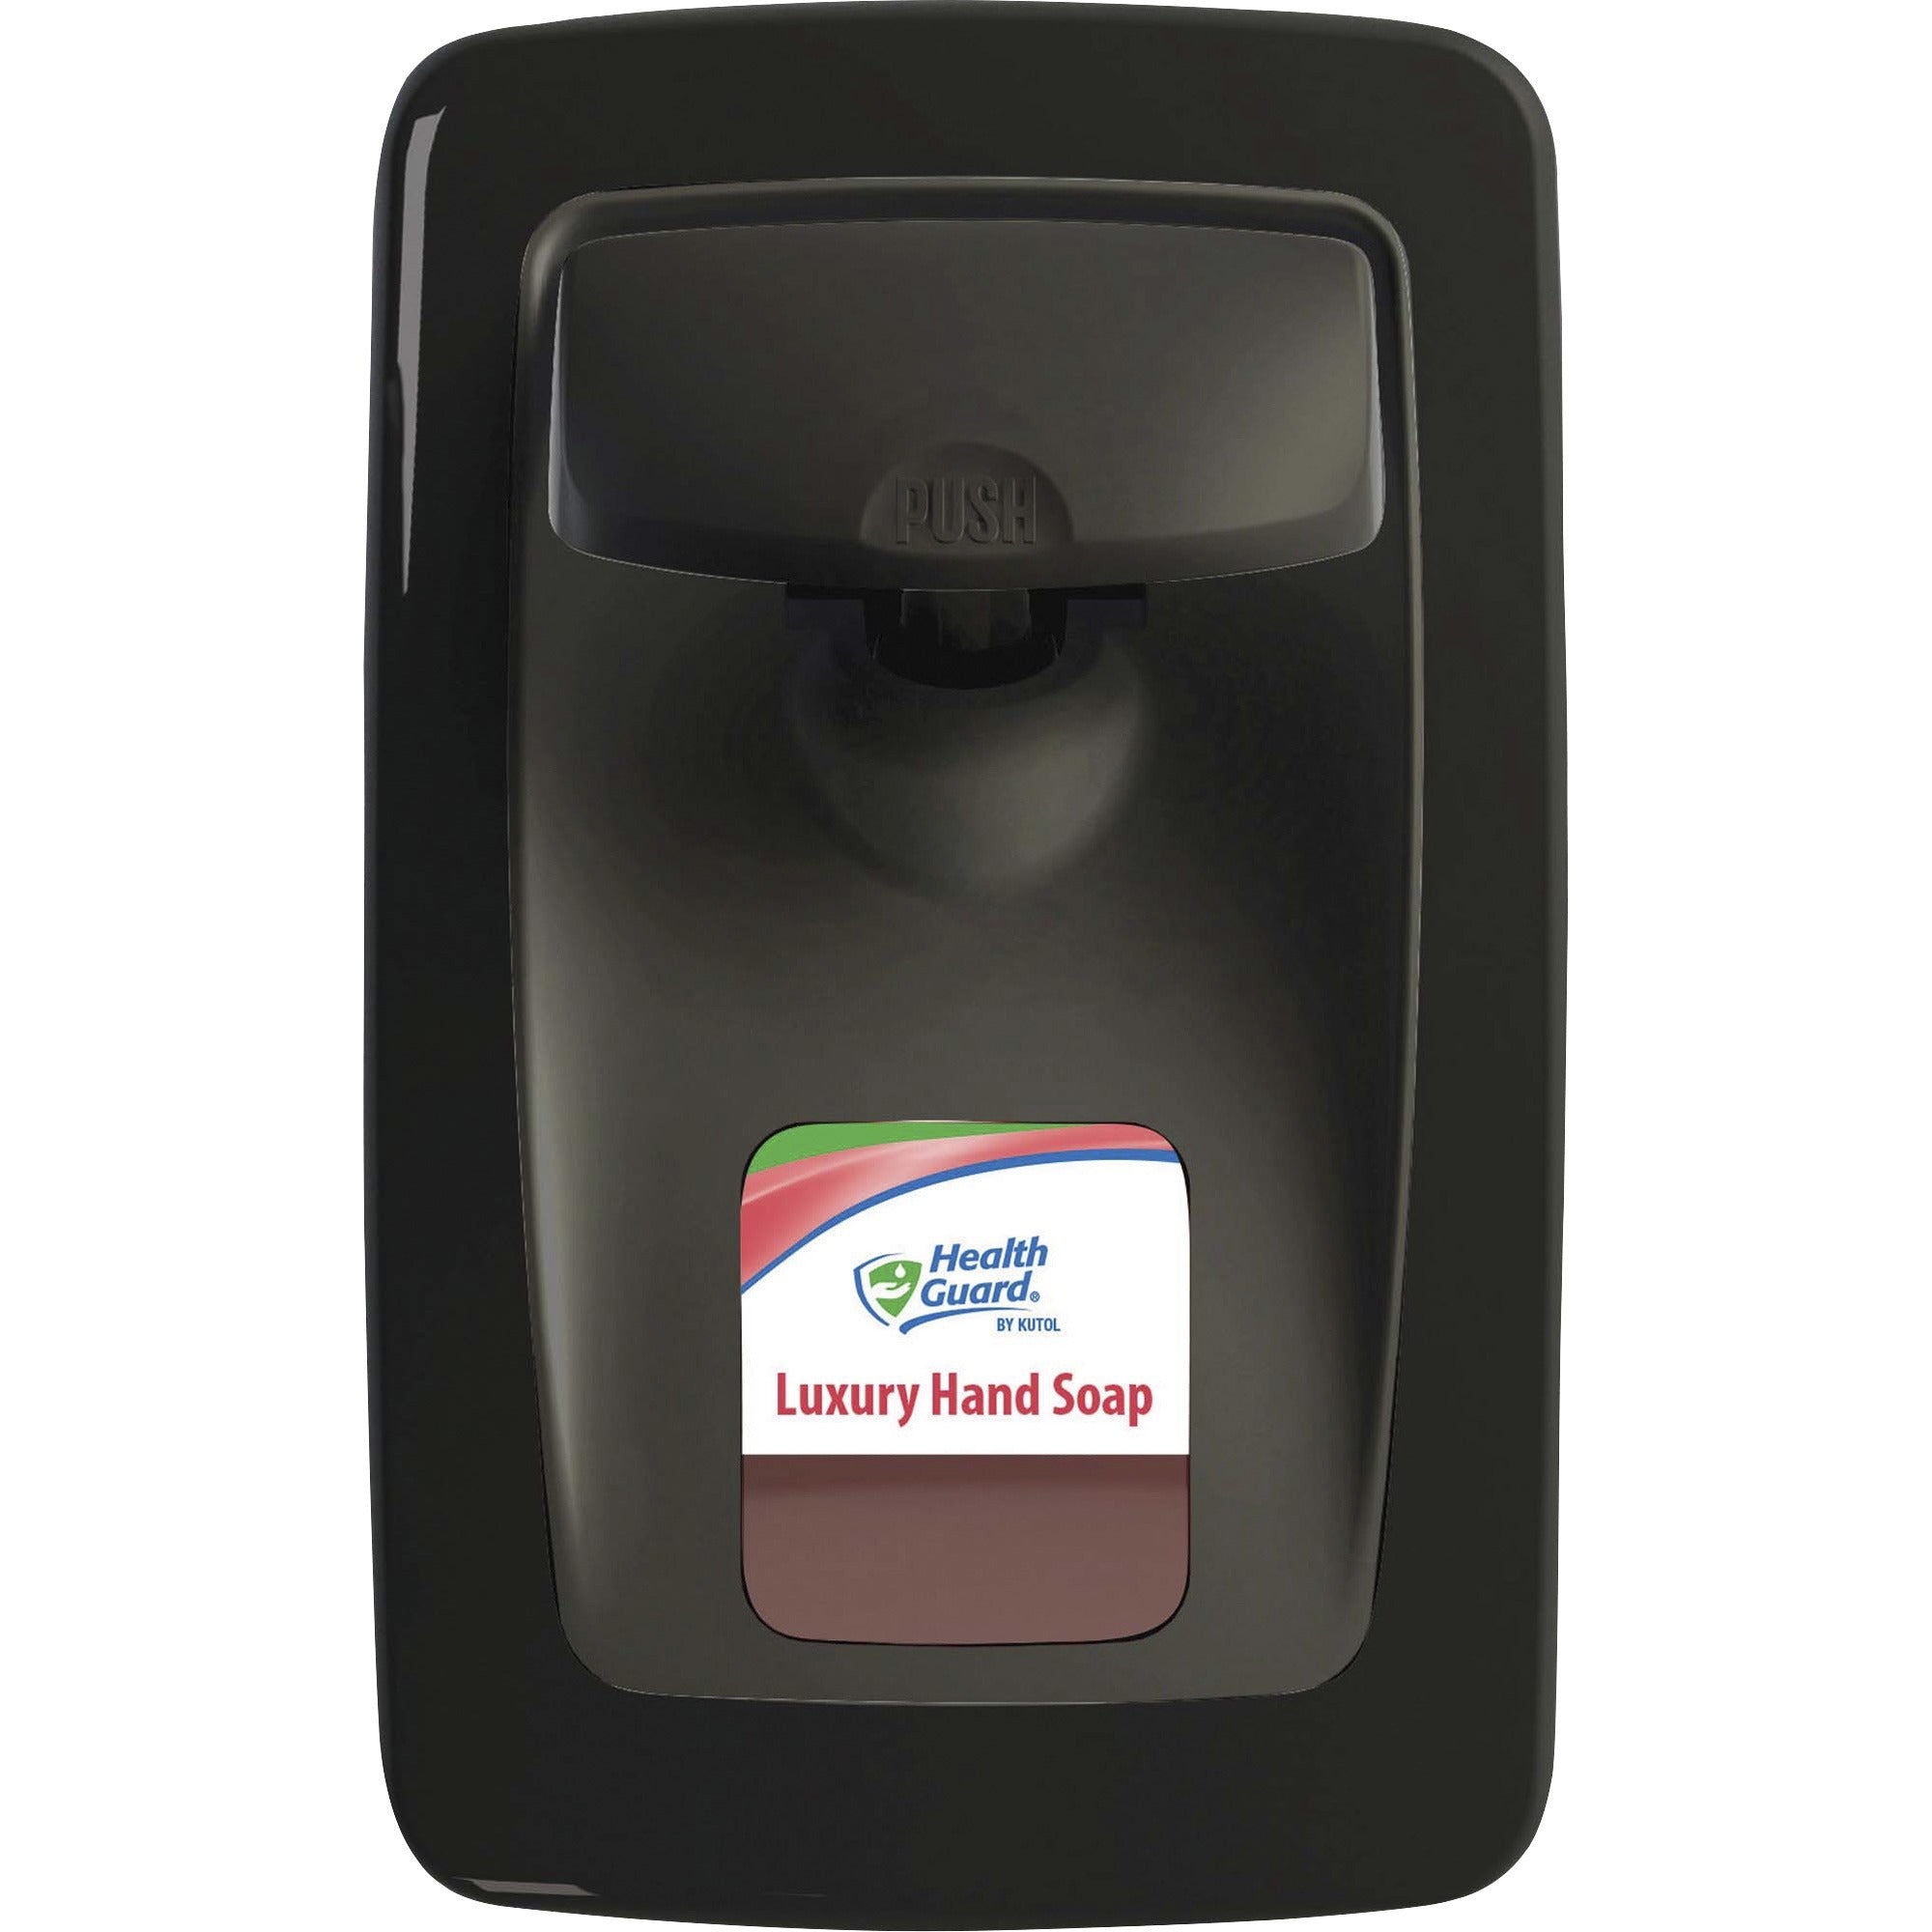 health-guard-manual-dispenser-manual-127-quart-capacity-durable-germ-free-wall-mountable-leak-proof-key-lock-refillable-black-1each_kutss001bk31 - 1